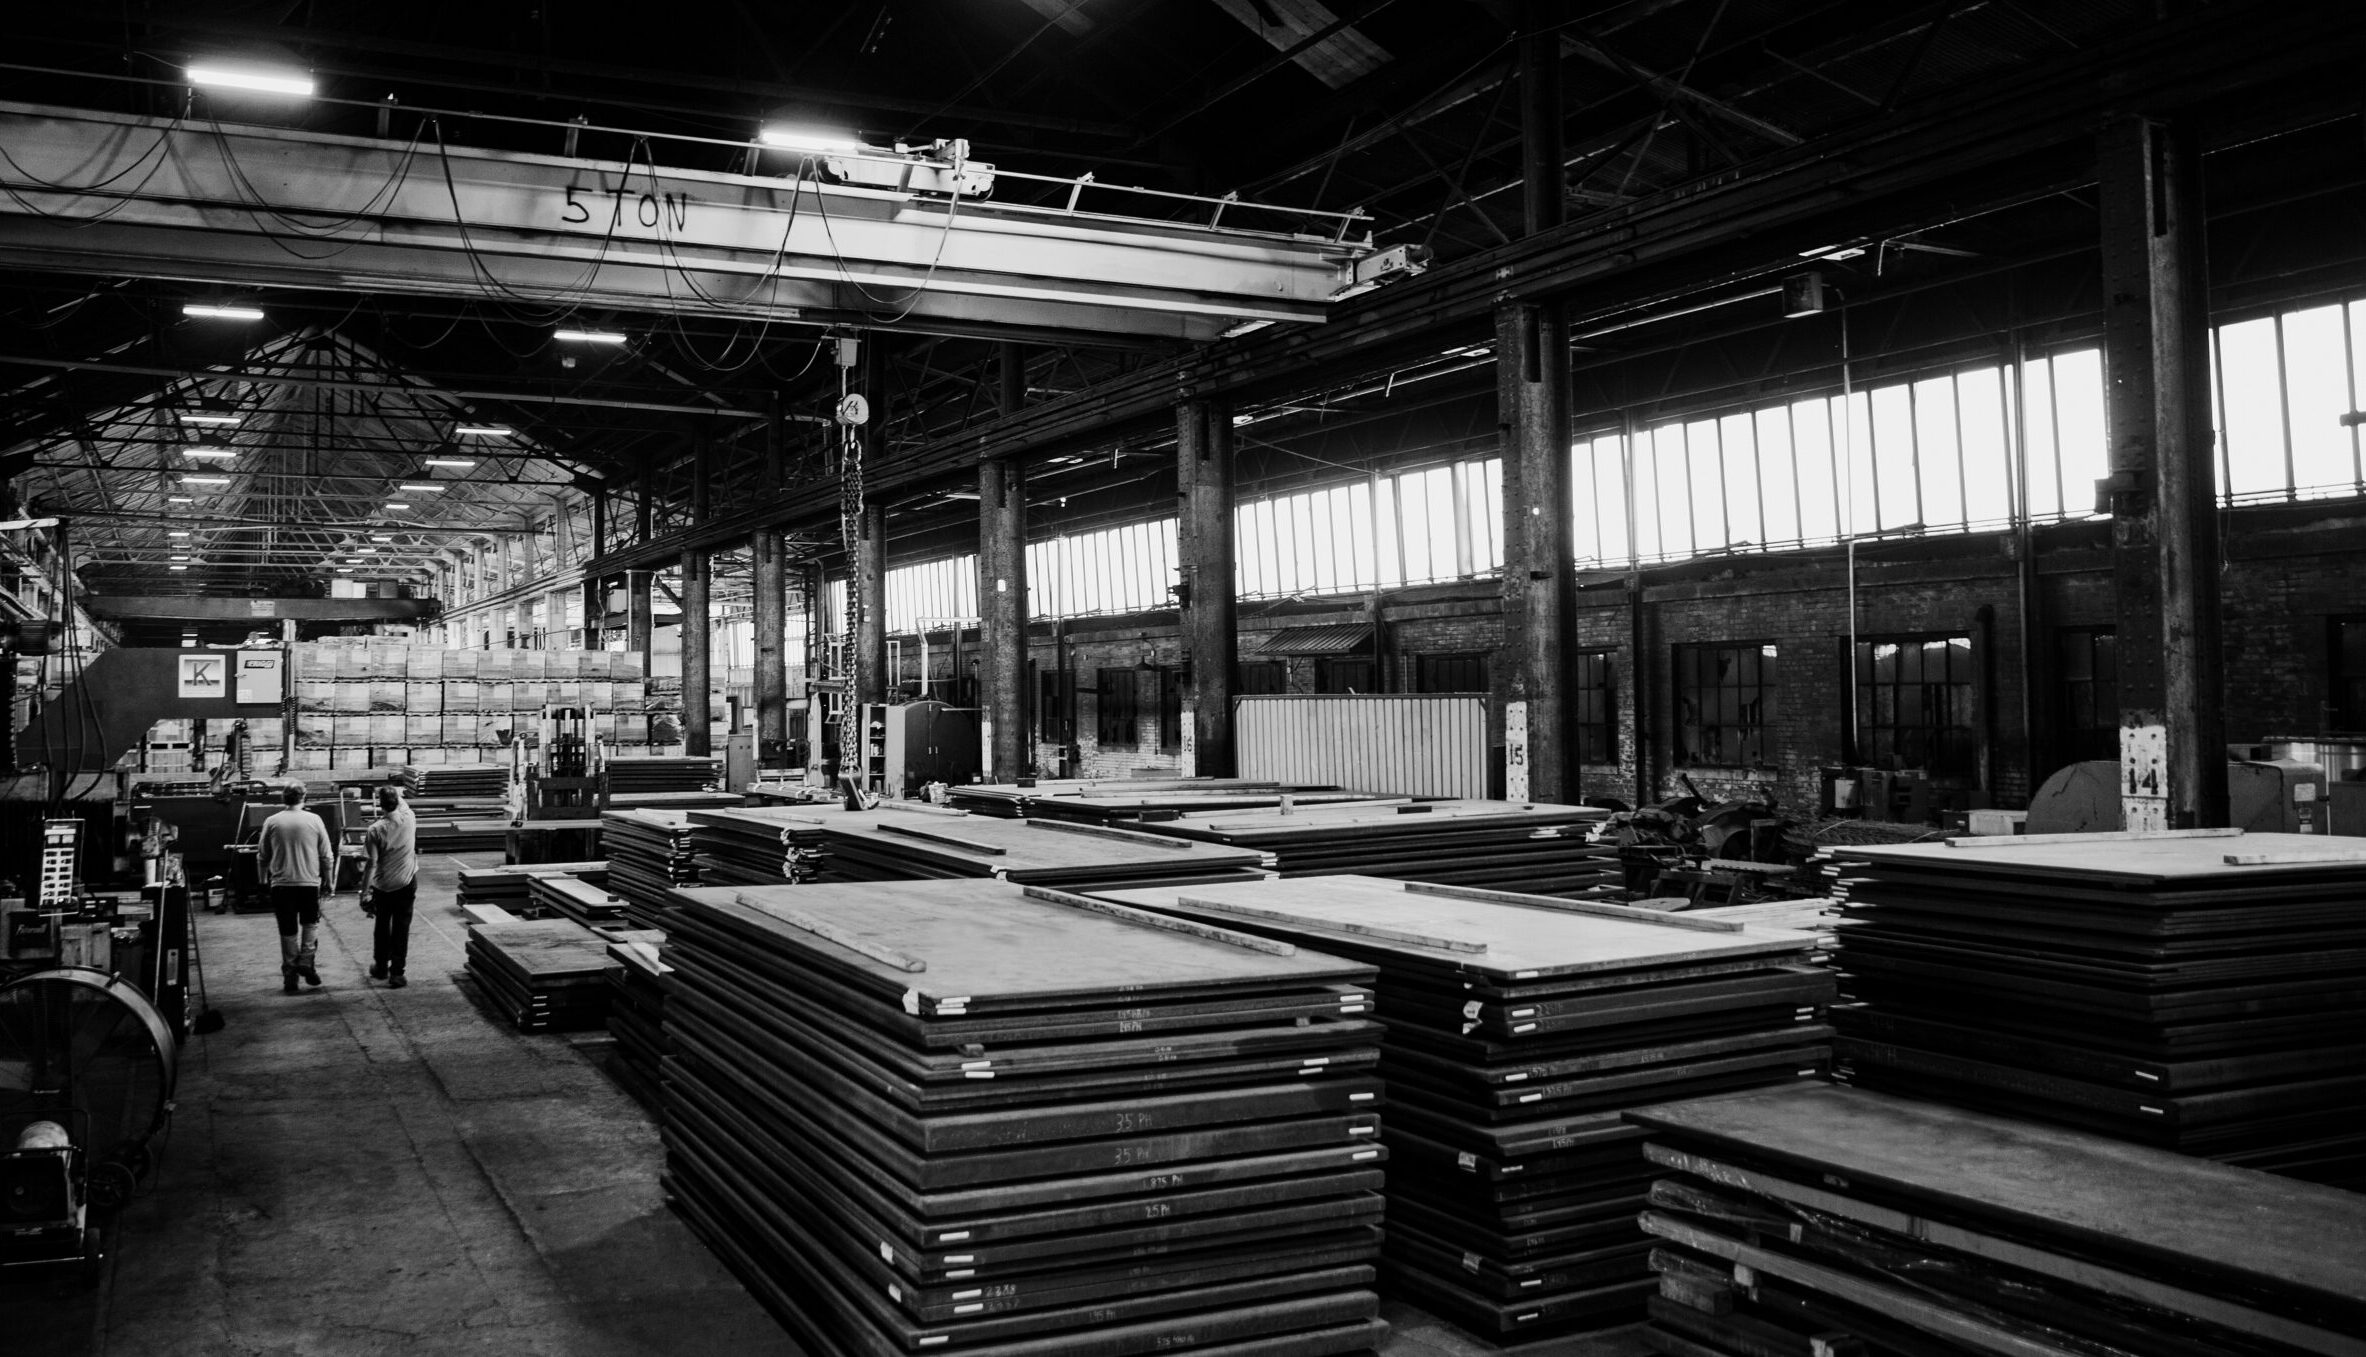 Kapital steel warehouse with stacks of steel plates